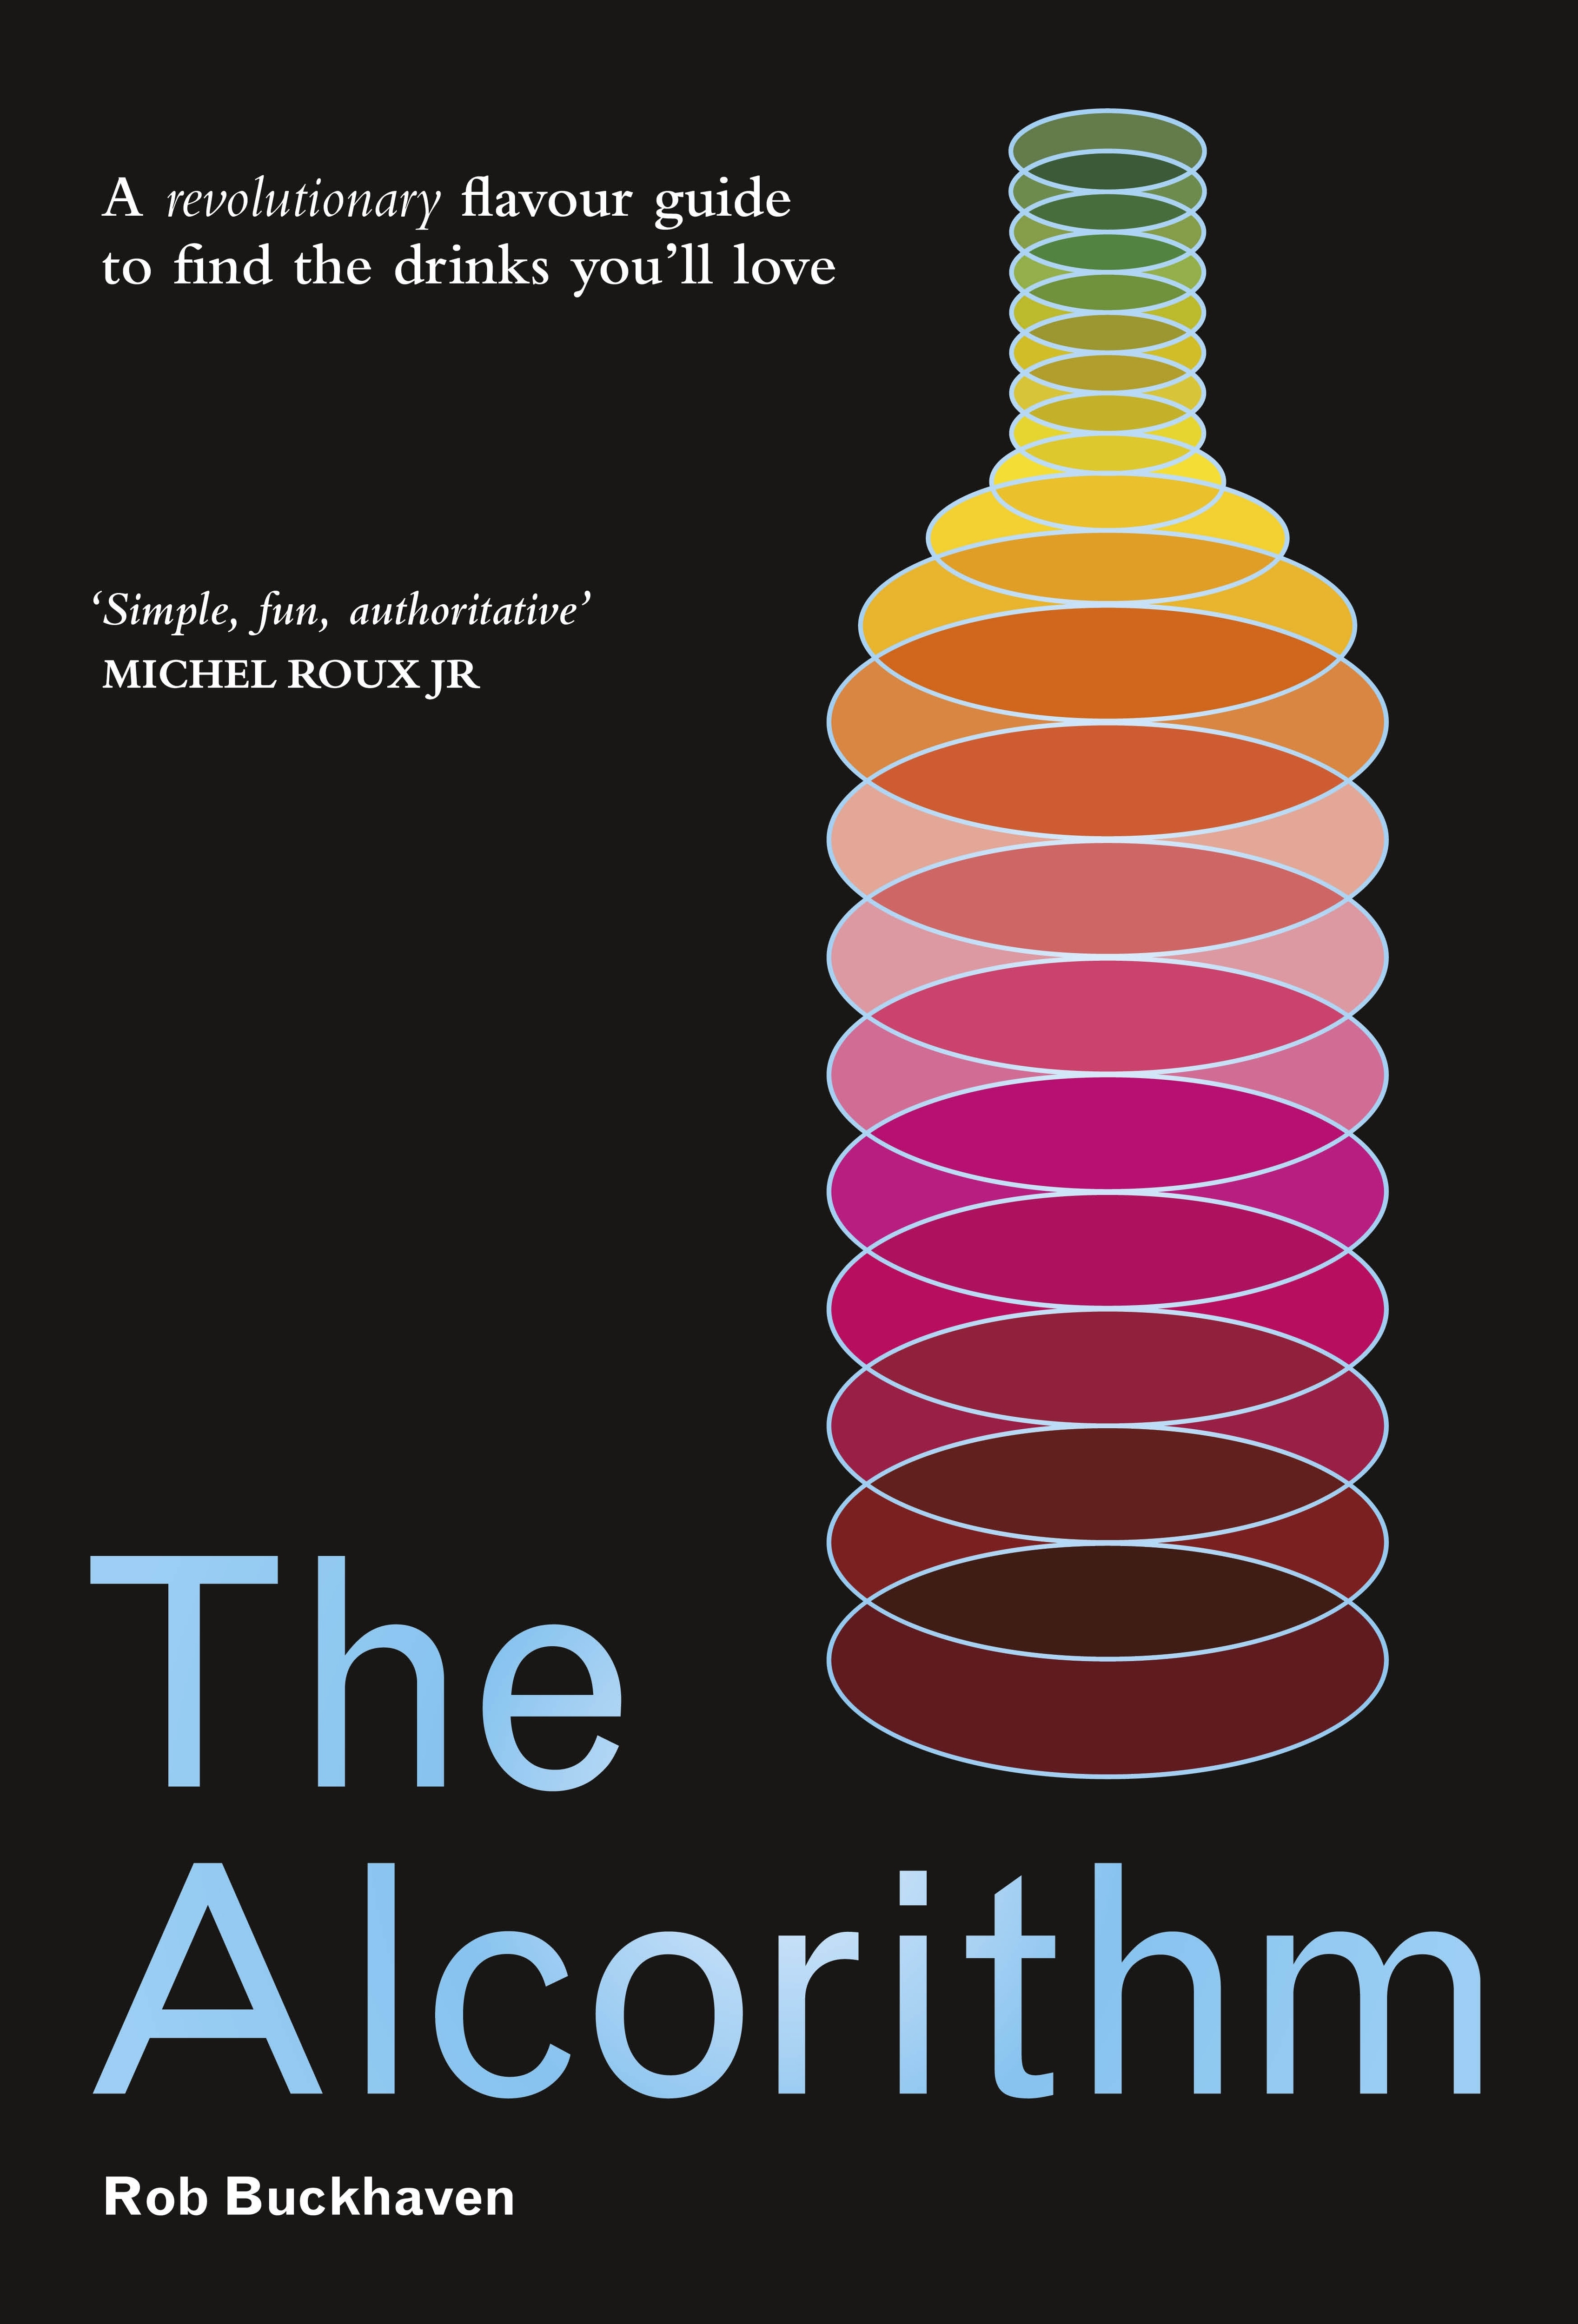 Book “The Alcorithm” by Rob Buckhaven — November 11, 2021